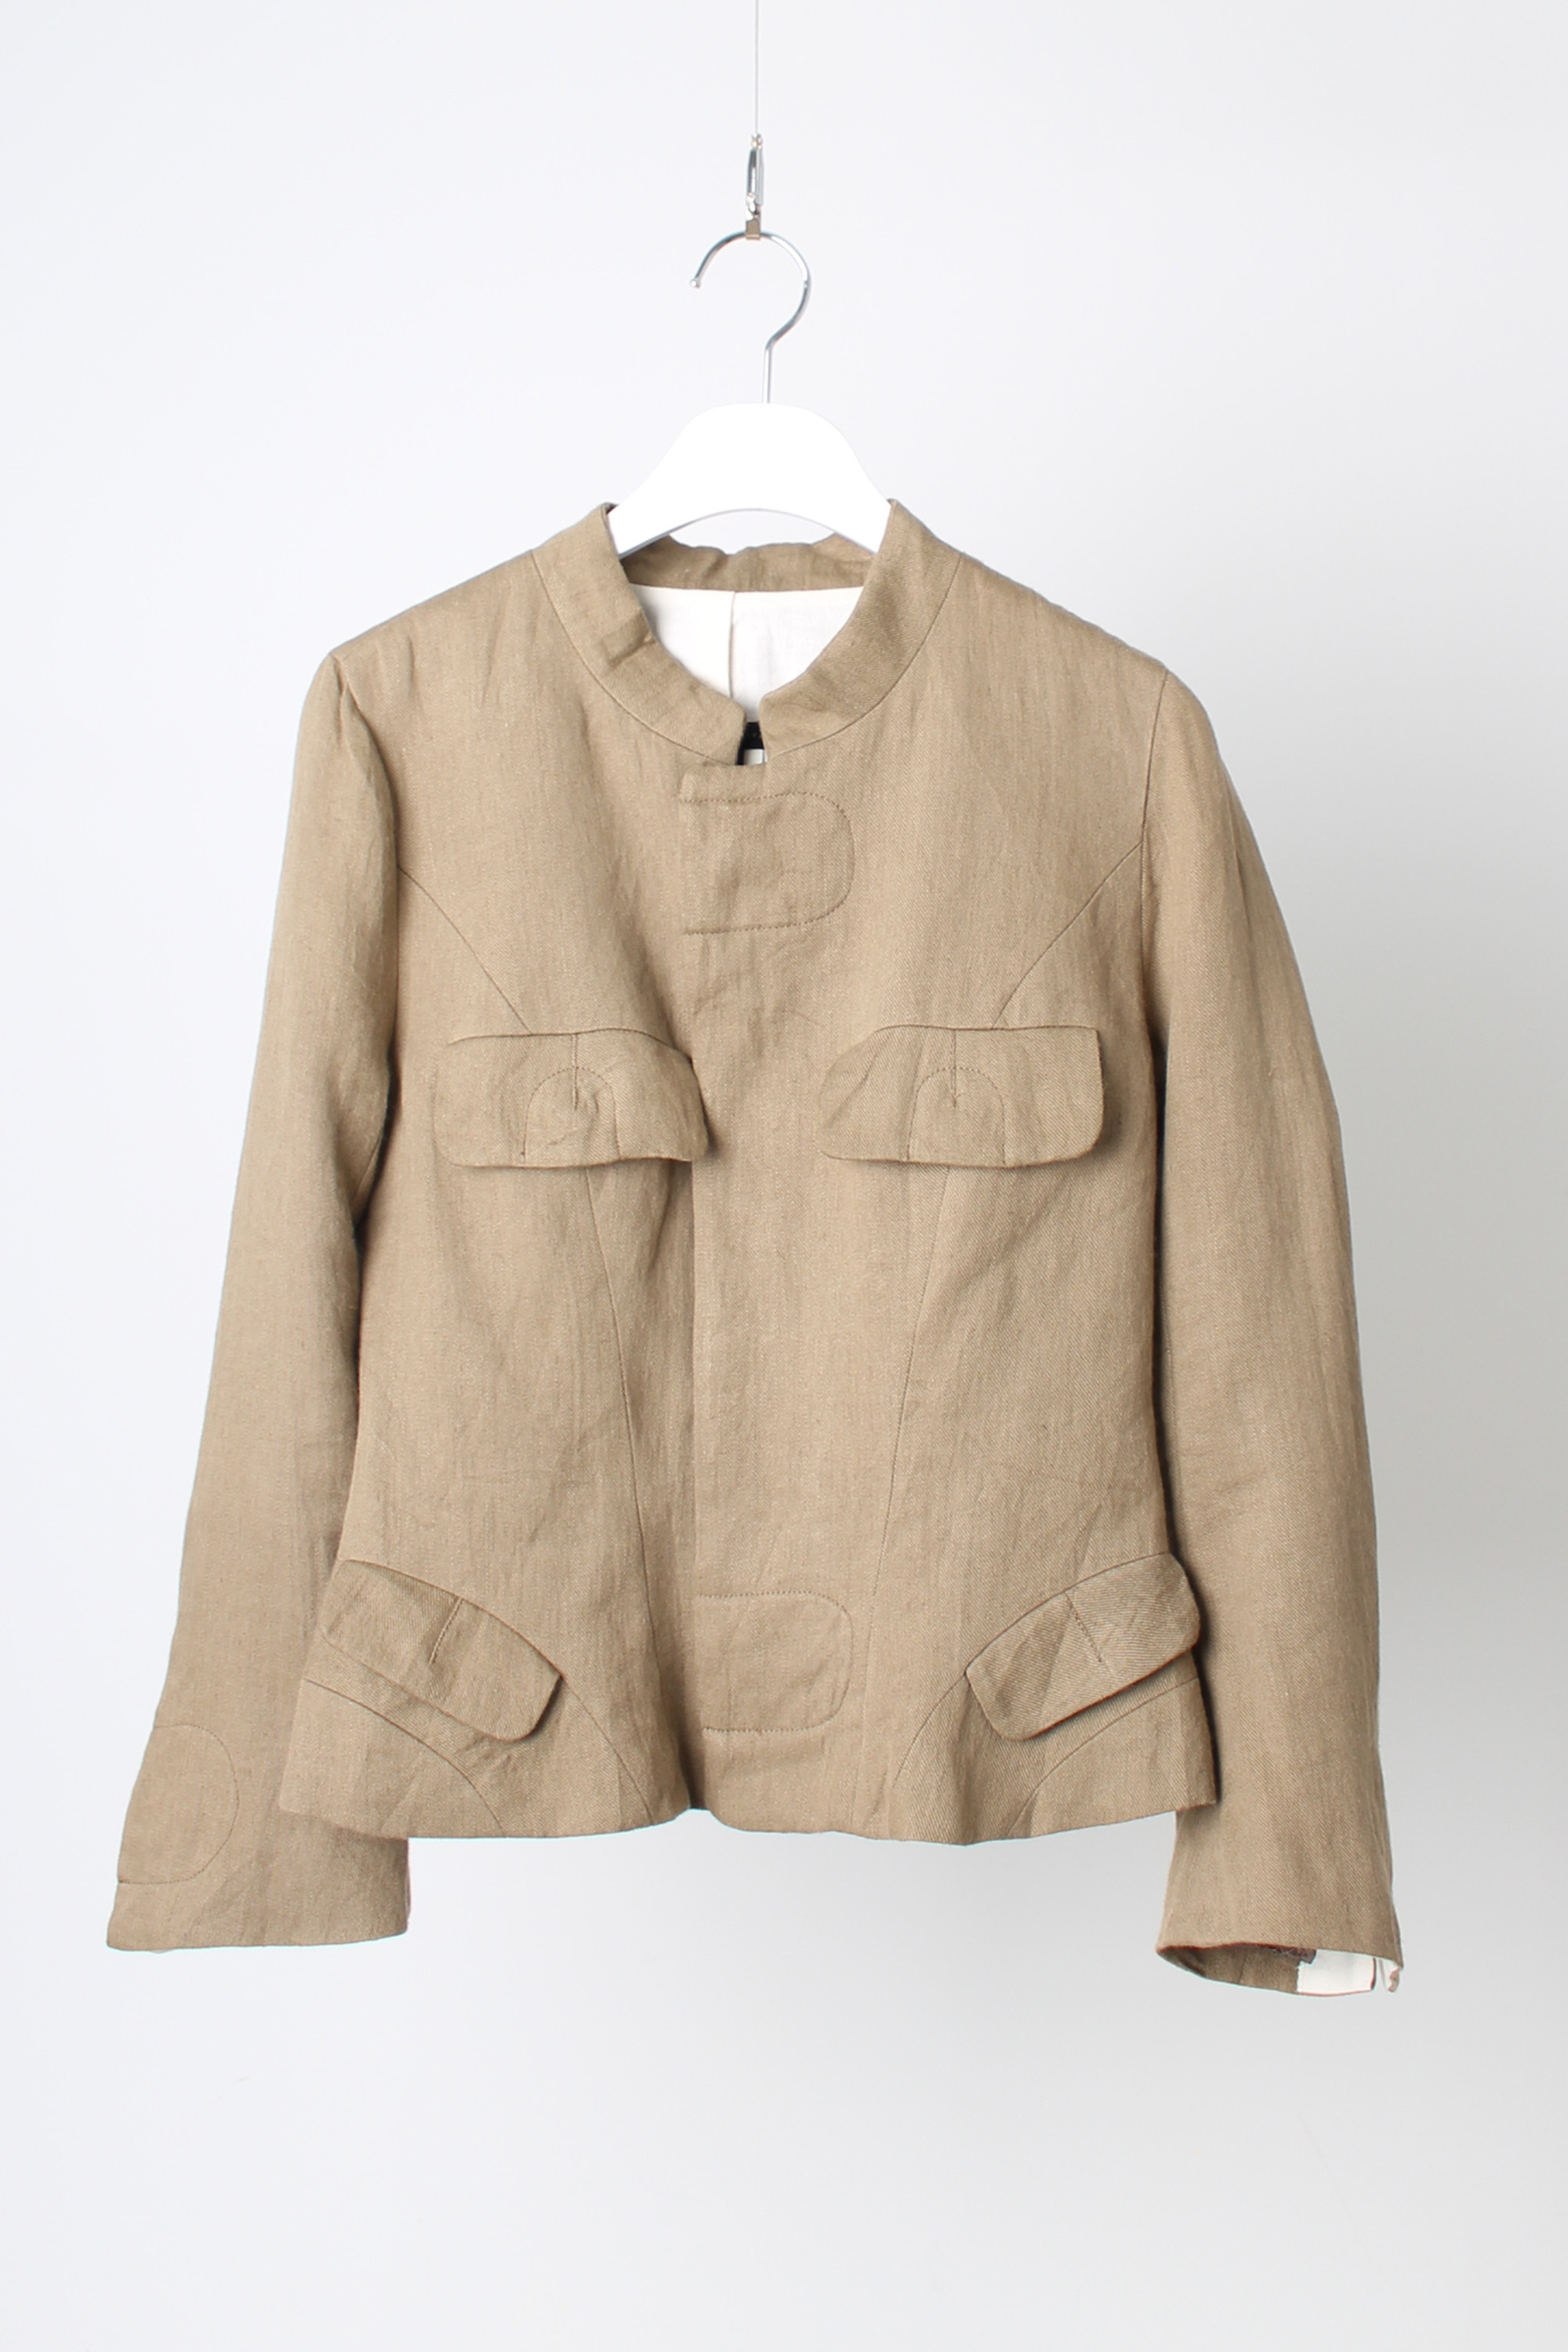 MASAHIRO MIYAZAKI 4 pocket jacket